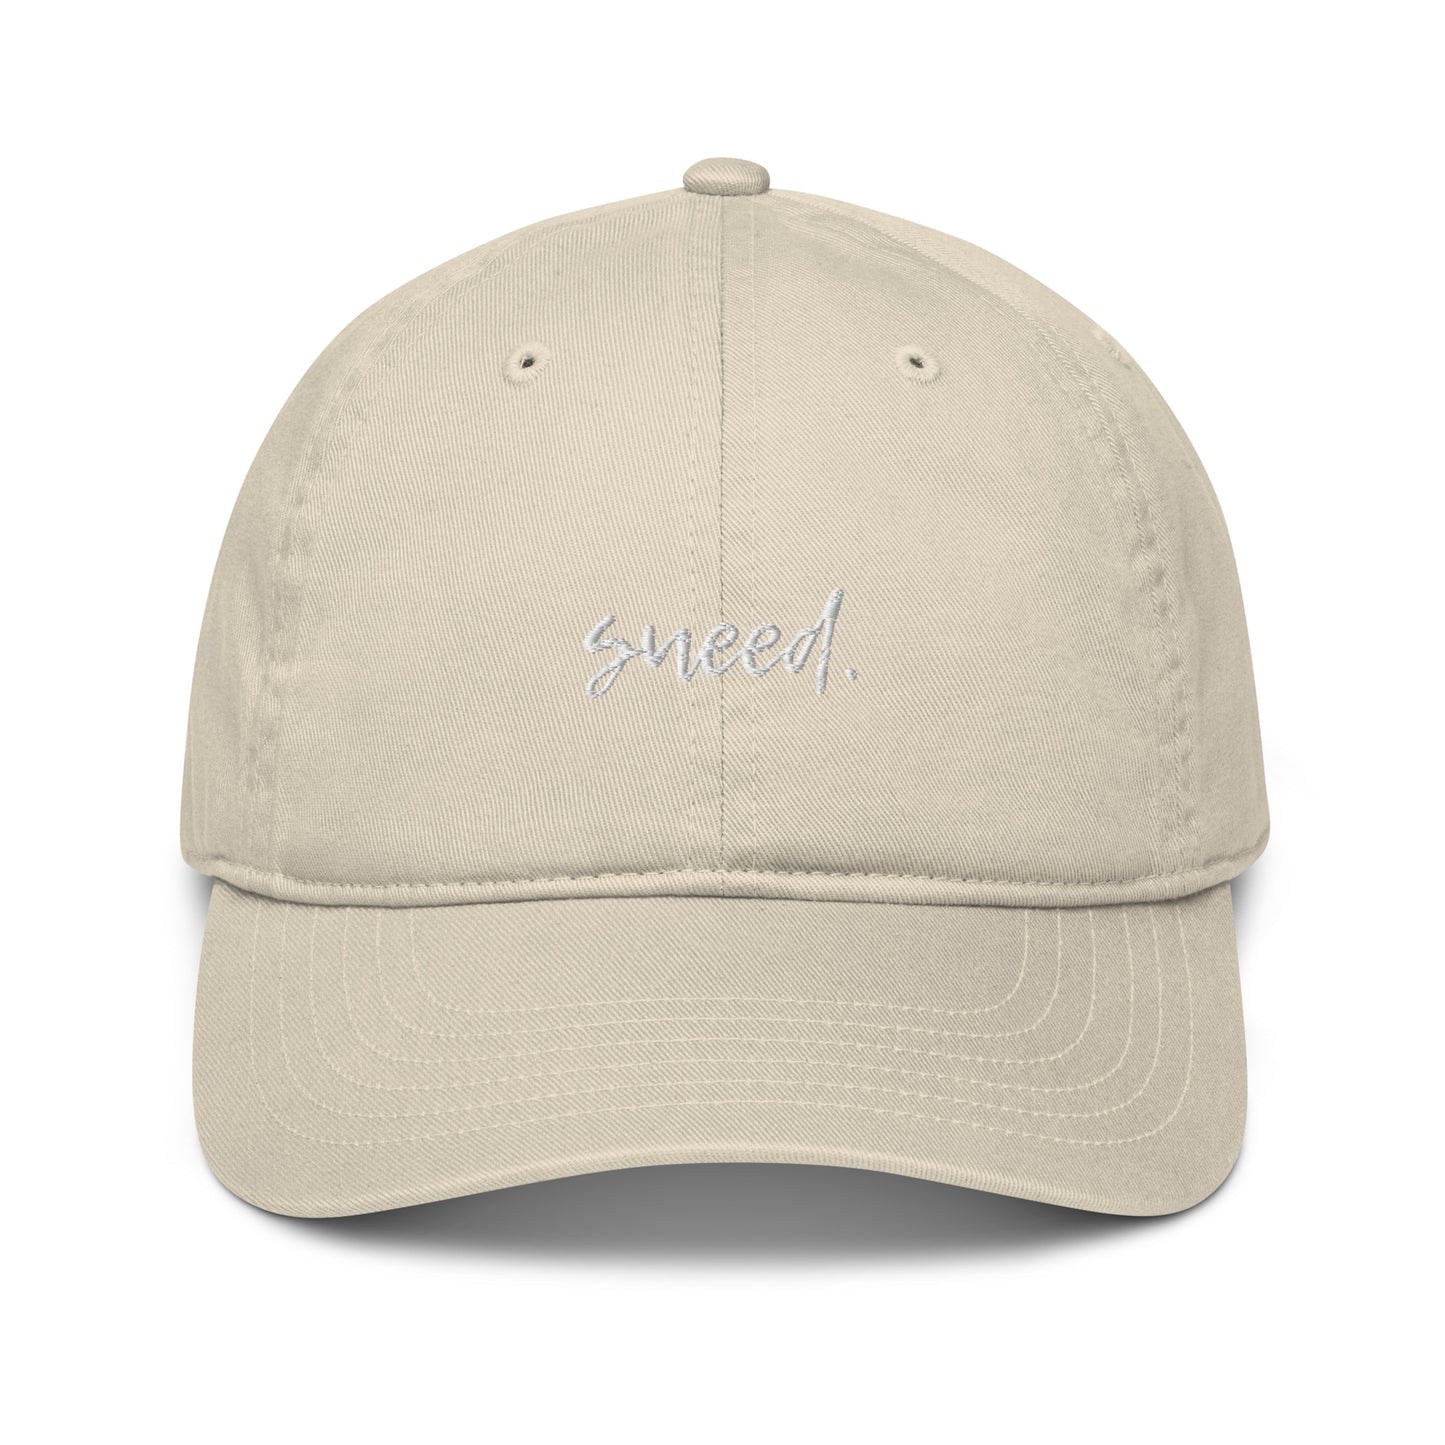 sueed. organic dad hat